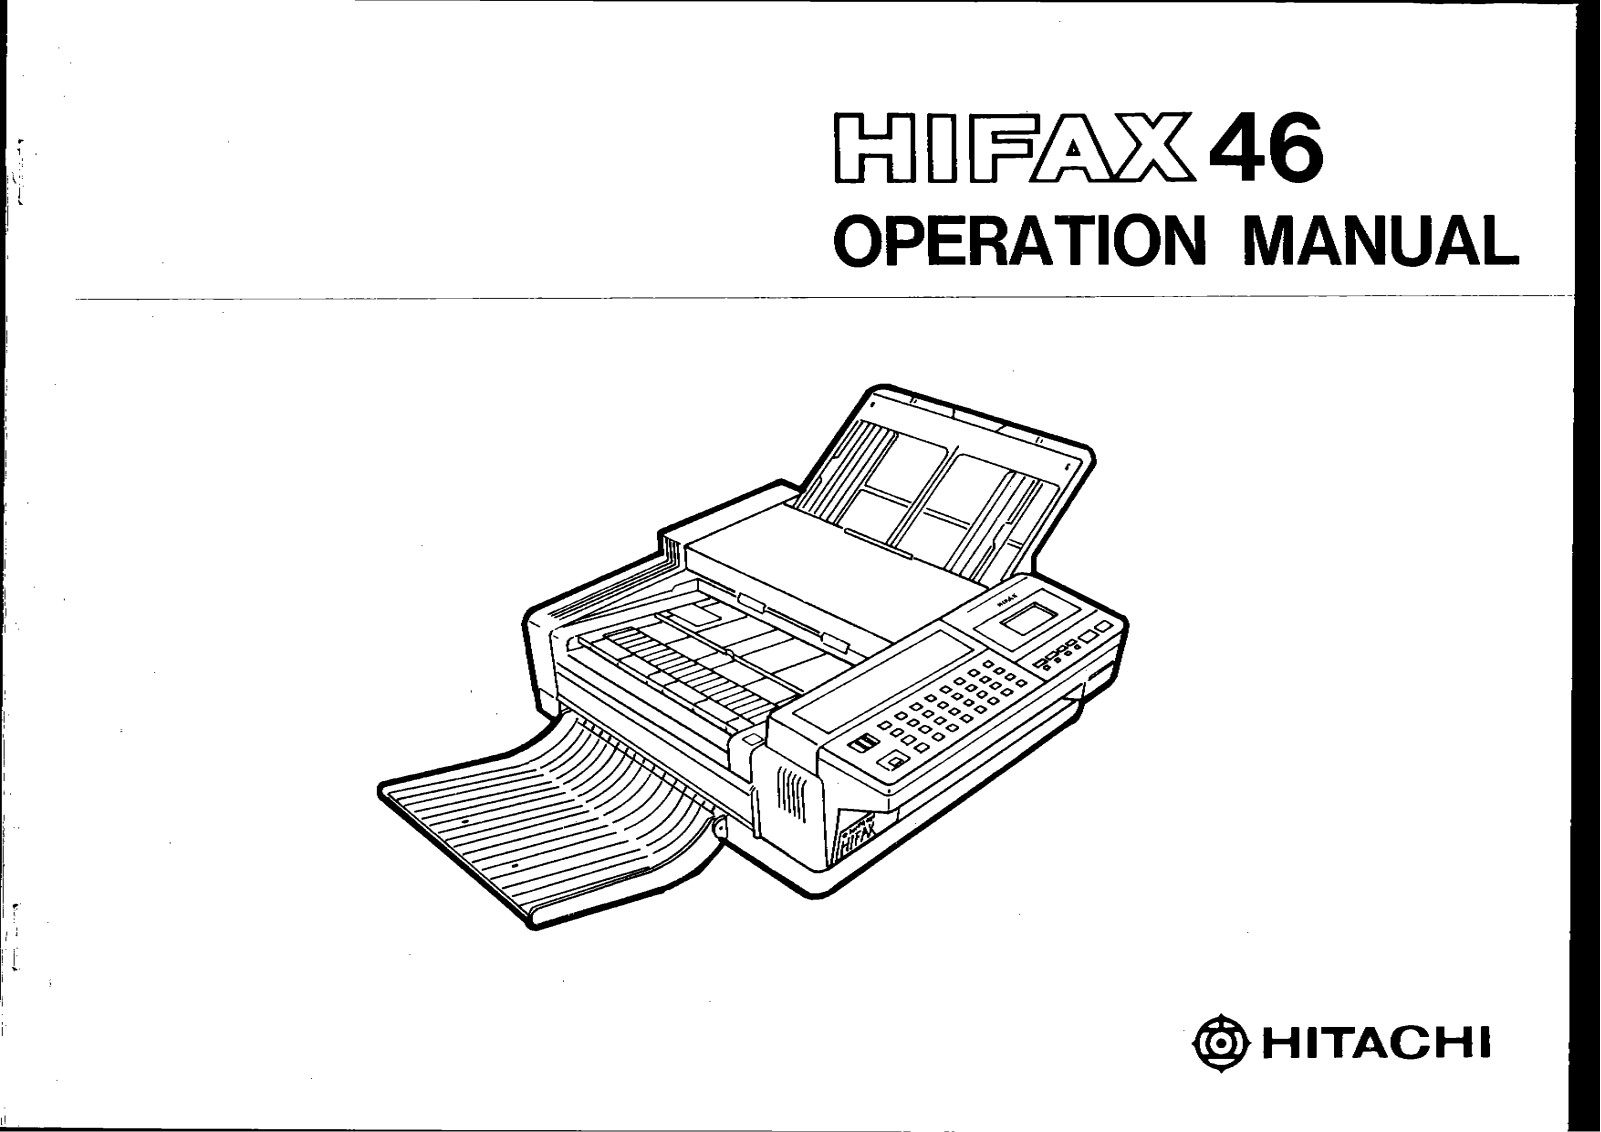 Hitachi HIFAX 46 User Manual